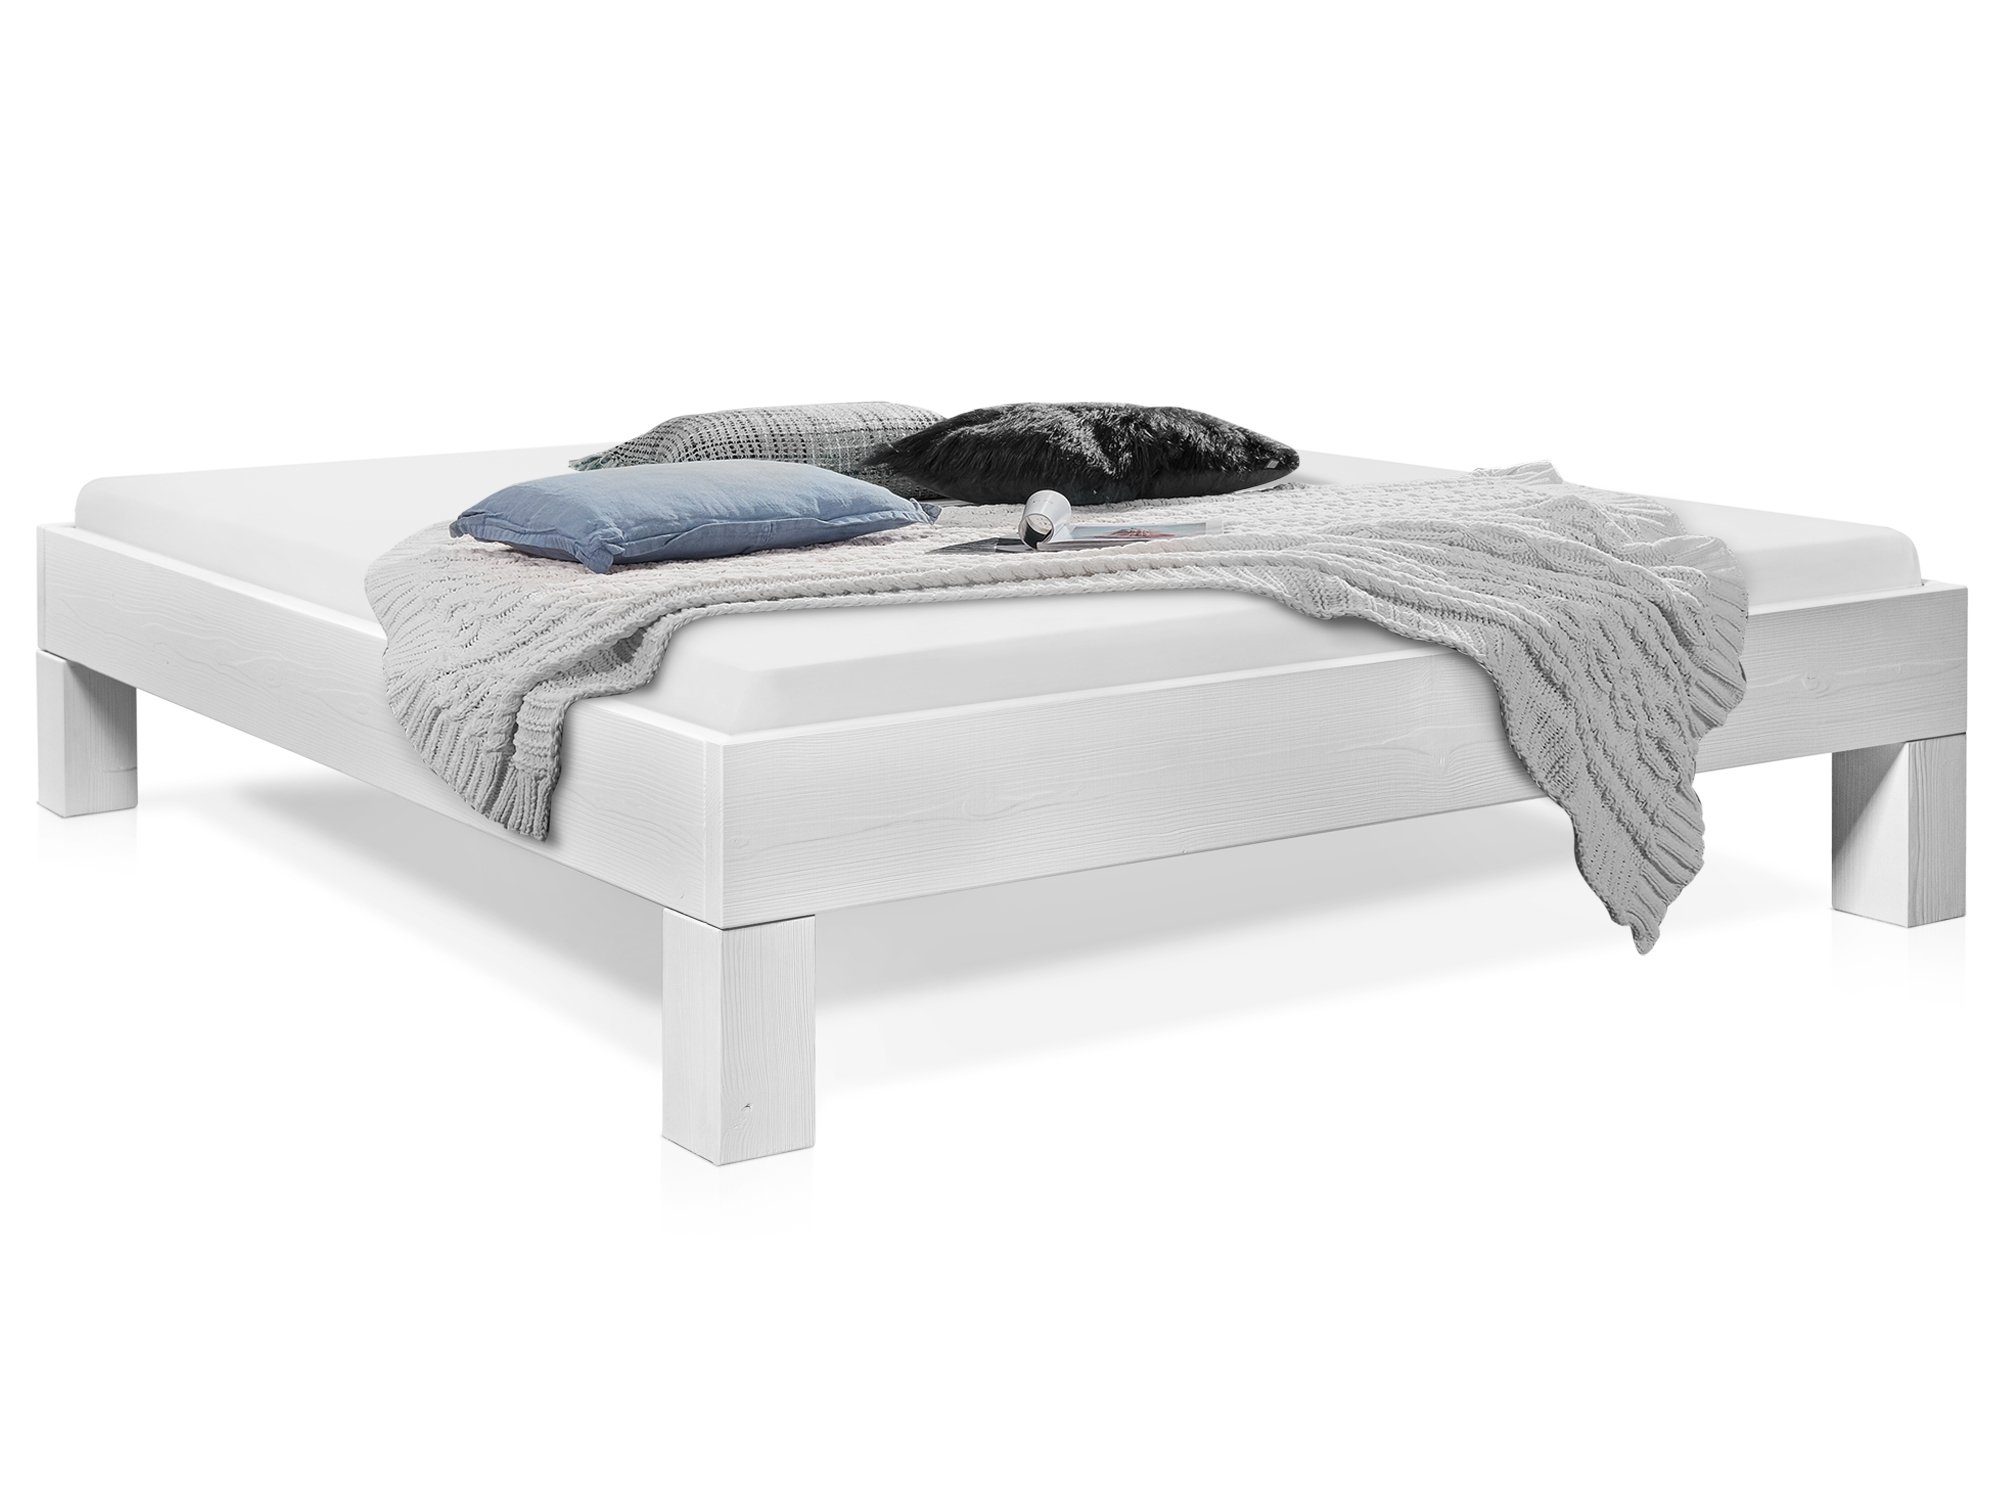 Massivholzbett, LUKY 4-Fuß-Bett ohne Kopfteil, Material Massivholz, Fichte weiß lackiert